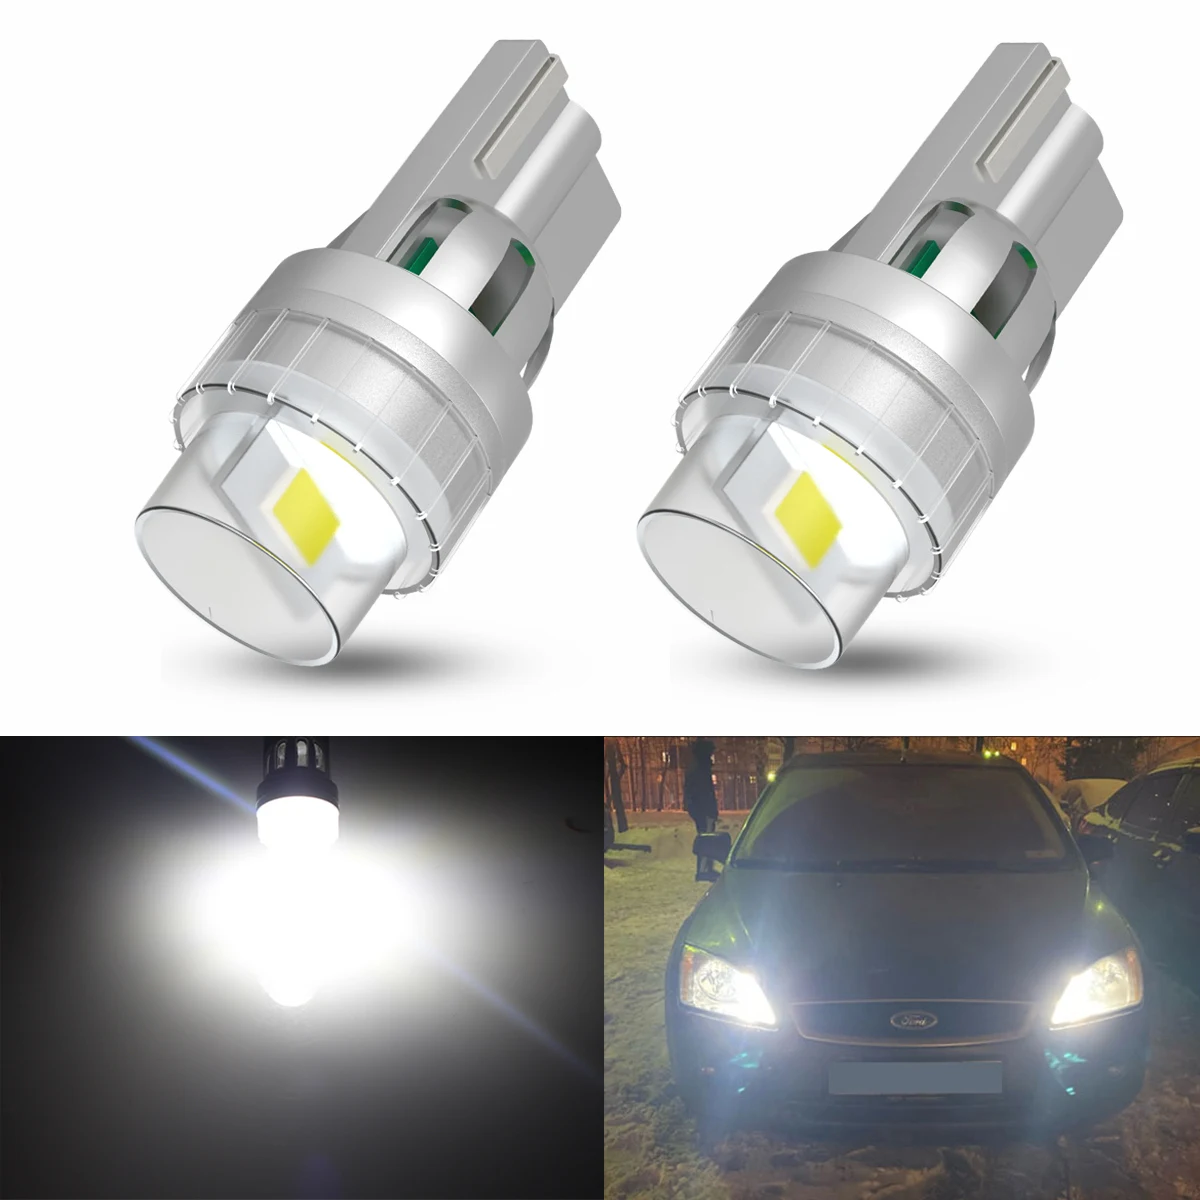 

2x W5W T10 LED No Error Car Clearance Parking Light for Ford Fiesta Focus 2 3 Mondeo mk2 mk3 mk4 Fusion Kuga 194 168 Light Bulb